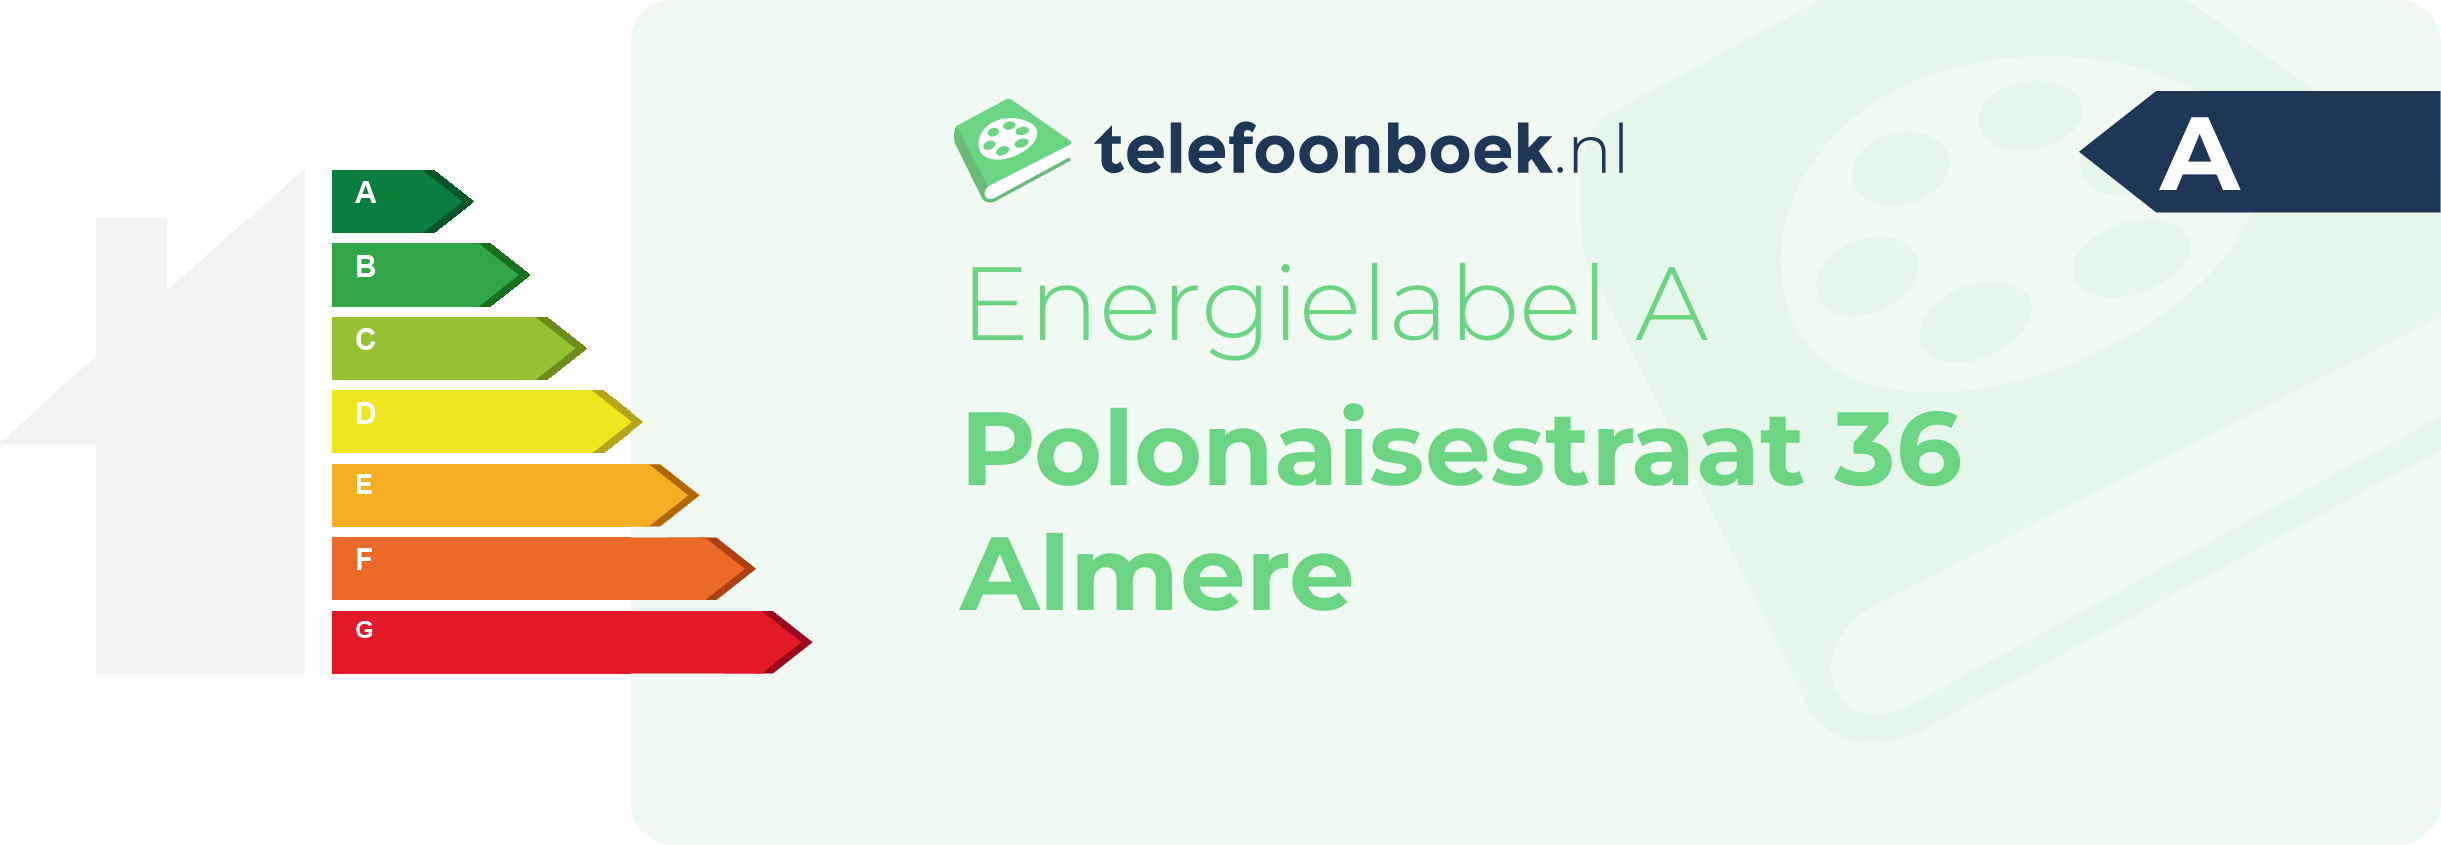 Energielabel Polonaisestraat 36 Almere